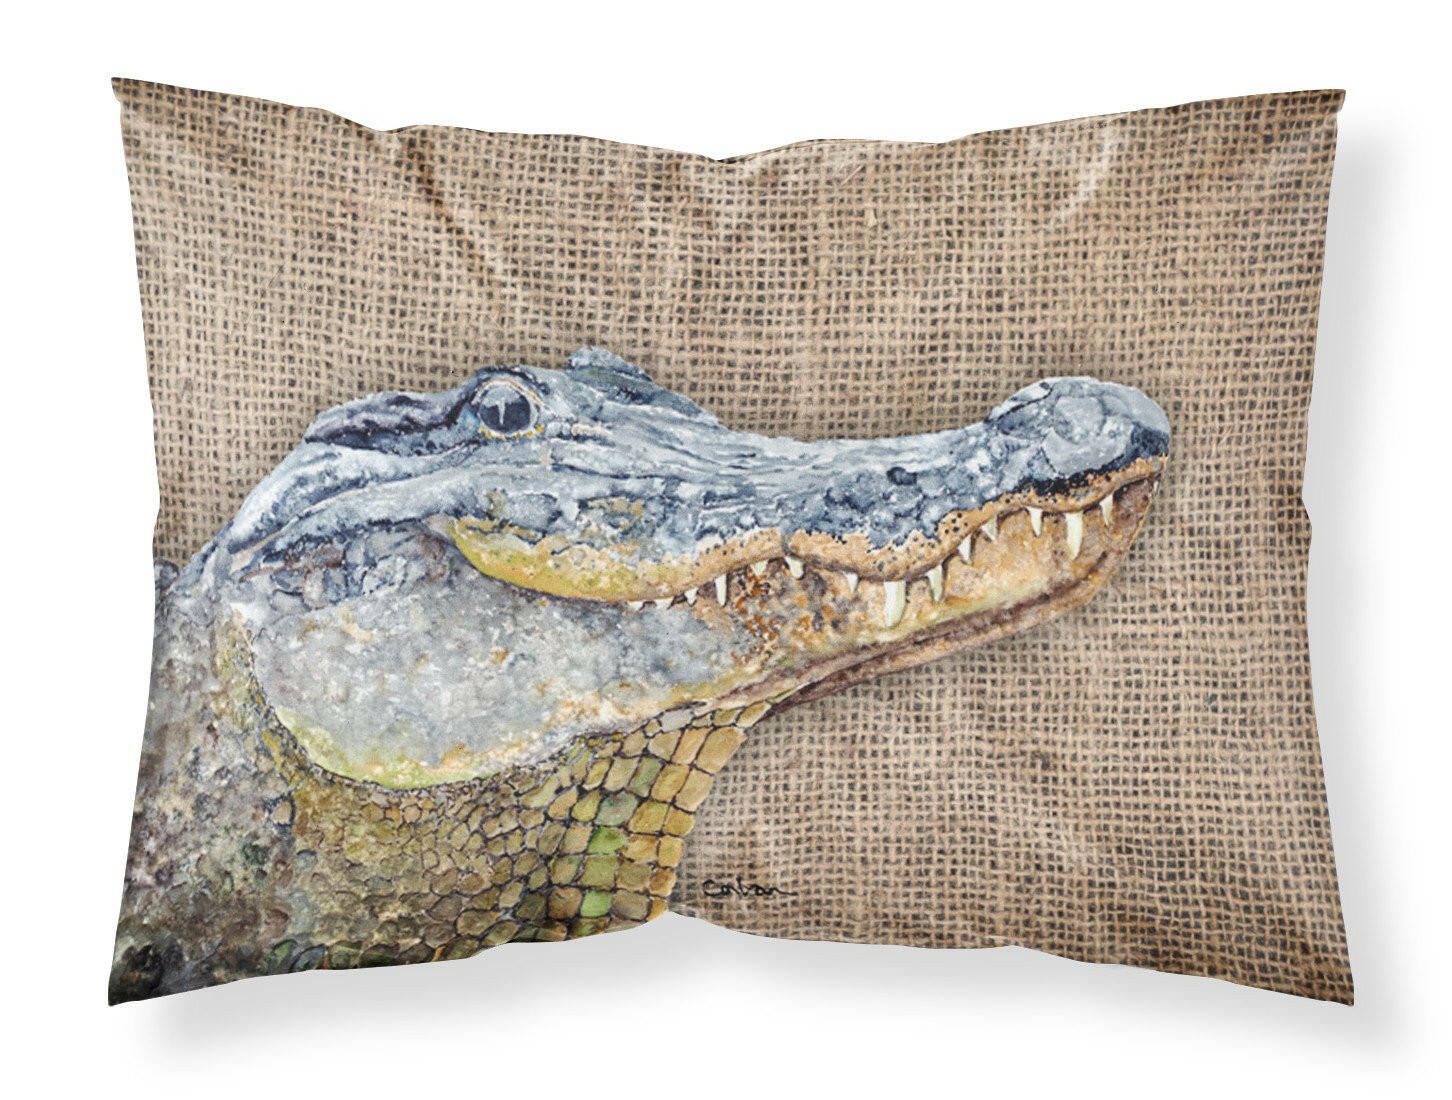 Alligator  Moisture wicking Fabric standard pillowcase by Caroline's Treasures